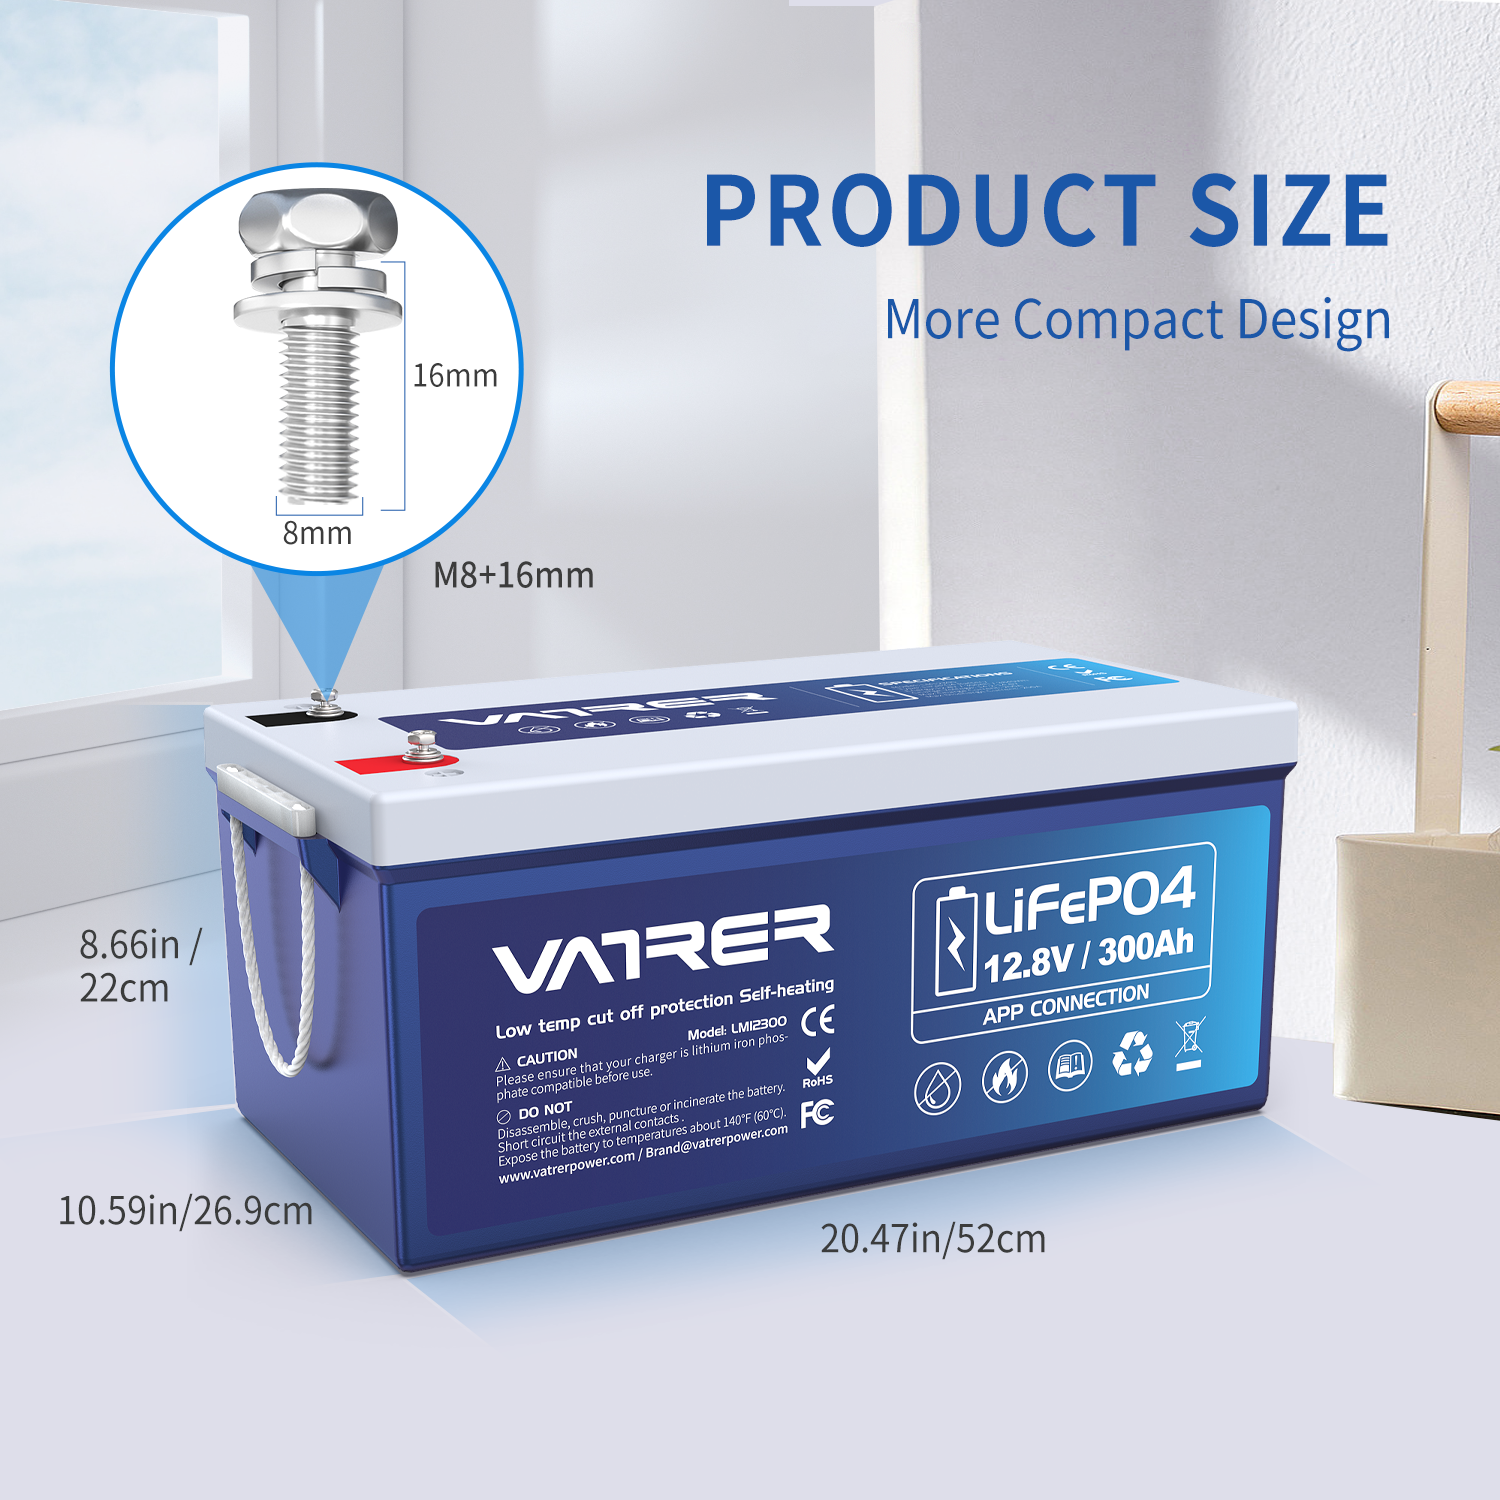 Vatler 12V 300AH Bluetooth LiFePO4 リチウム バッテリー、自己発熱、200A BMS、低温充電 (-4°F) 対応、5000 サイクル以上、2560W 電力